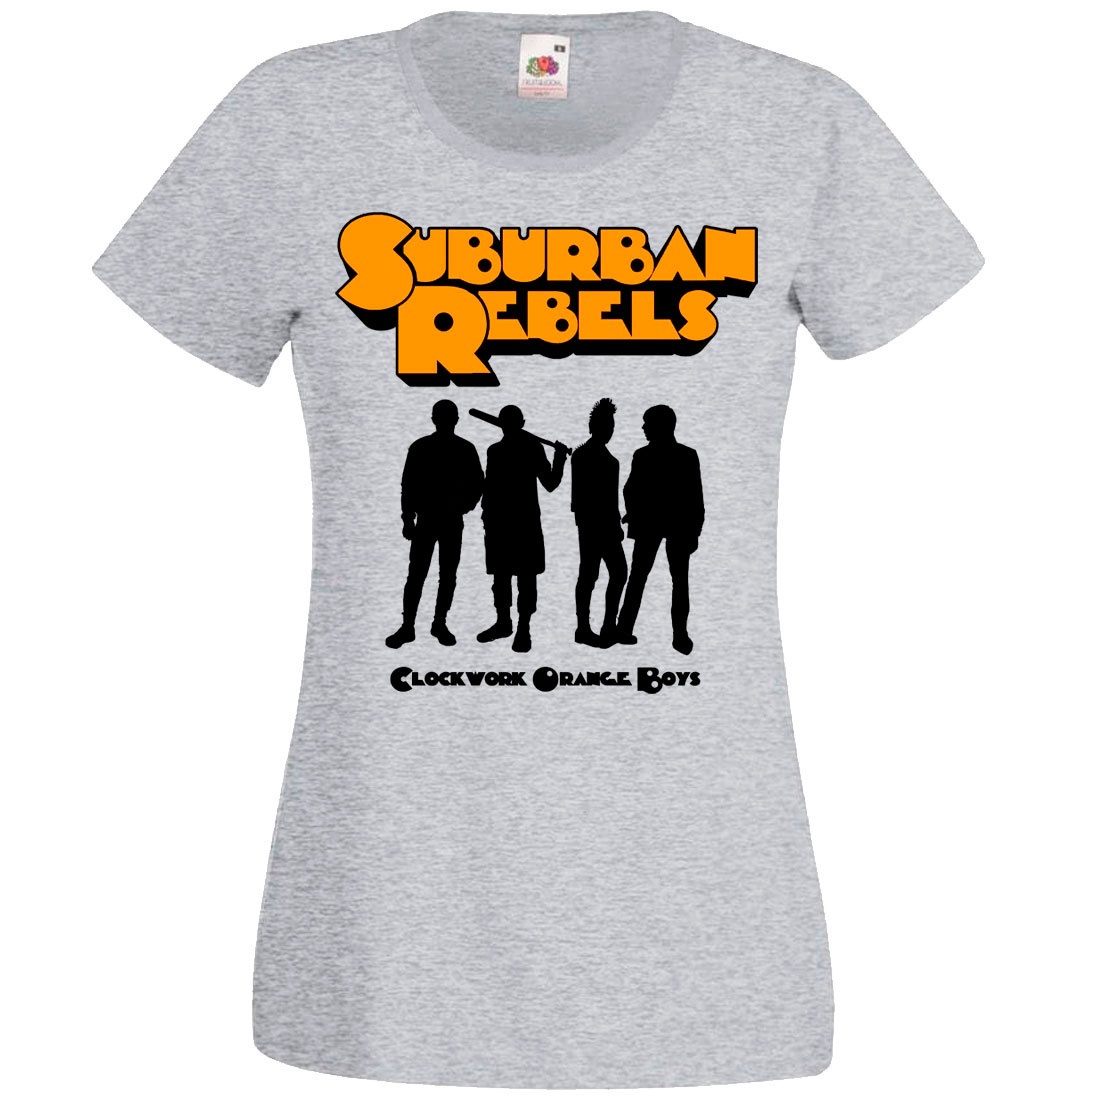 Artwork for SUBURBAN REBELS Clockwork Orange Boys Grey Ladies Tshirt